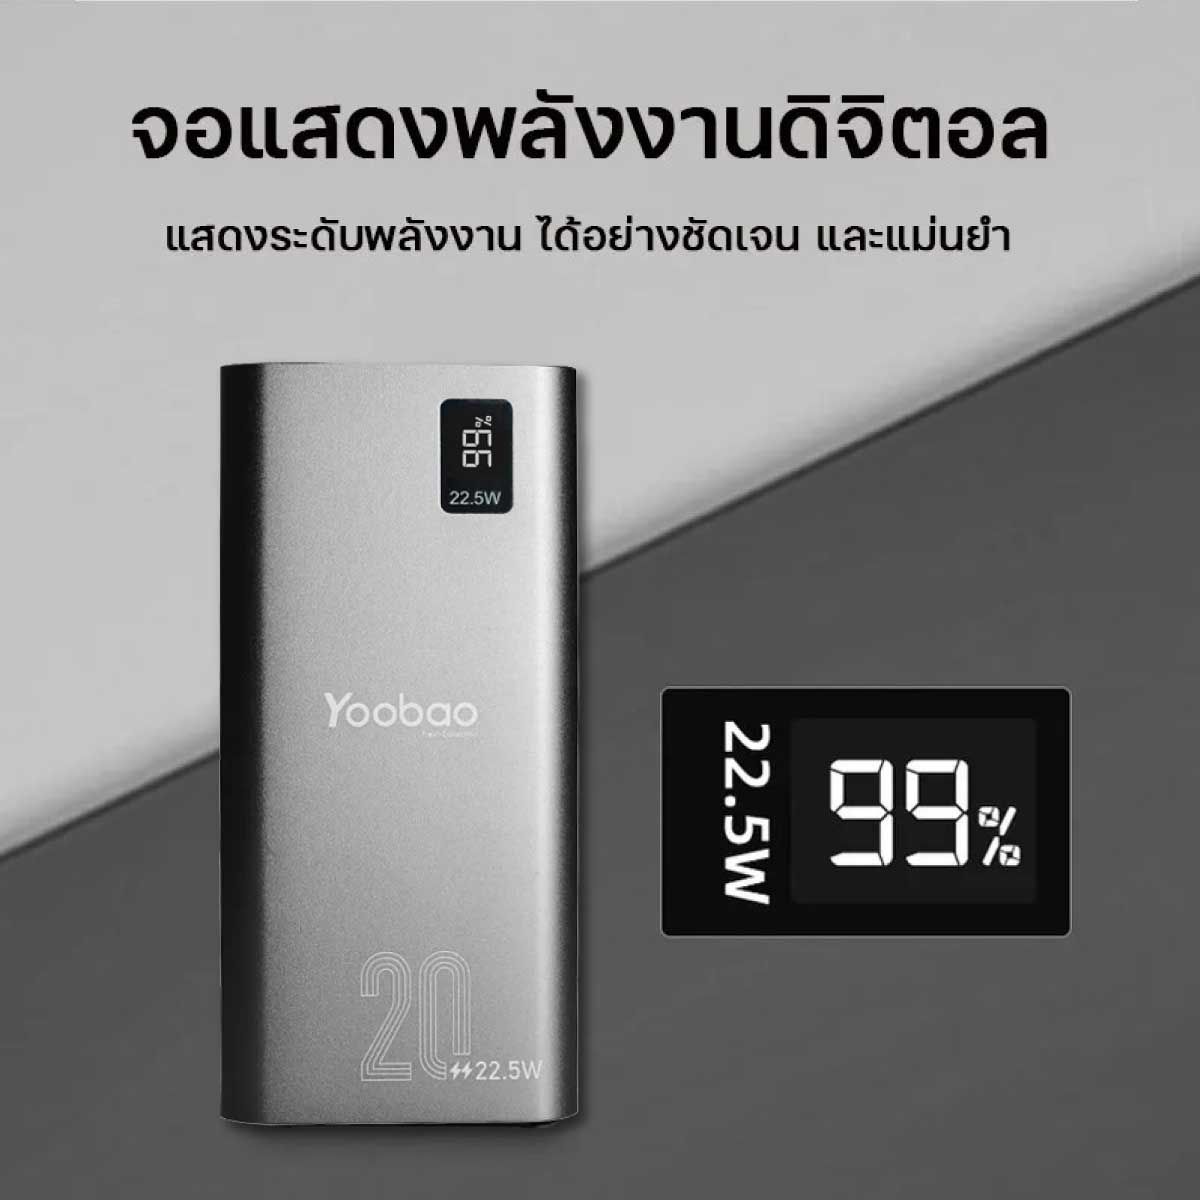 YOOBAO Powerbank 20000mAh รุ่นPD28-V2/Gray Fast Charge/QC/PD20W รองรับการชาร์จเร็ว LCD Display Aluminum+ABS